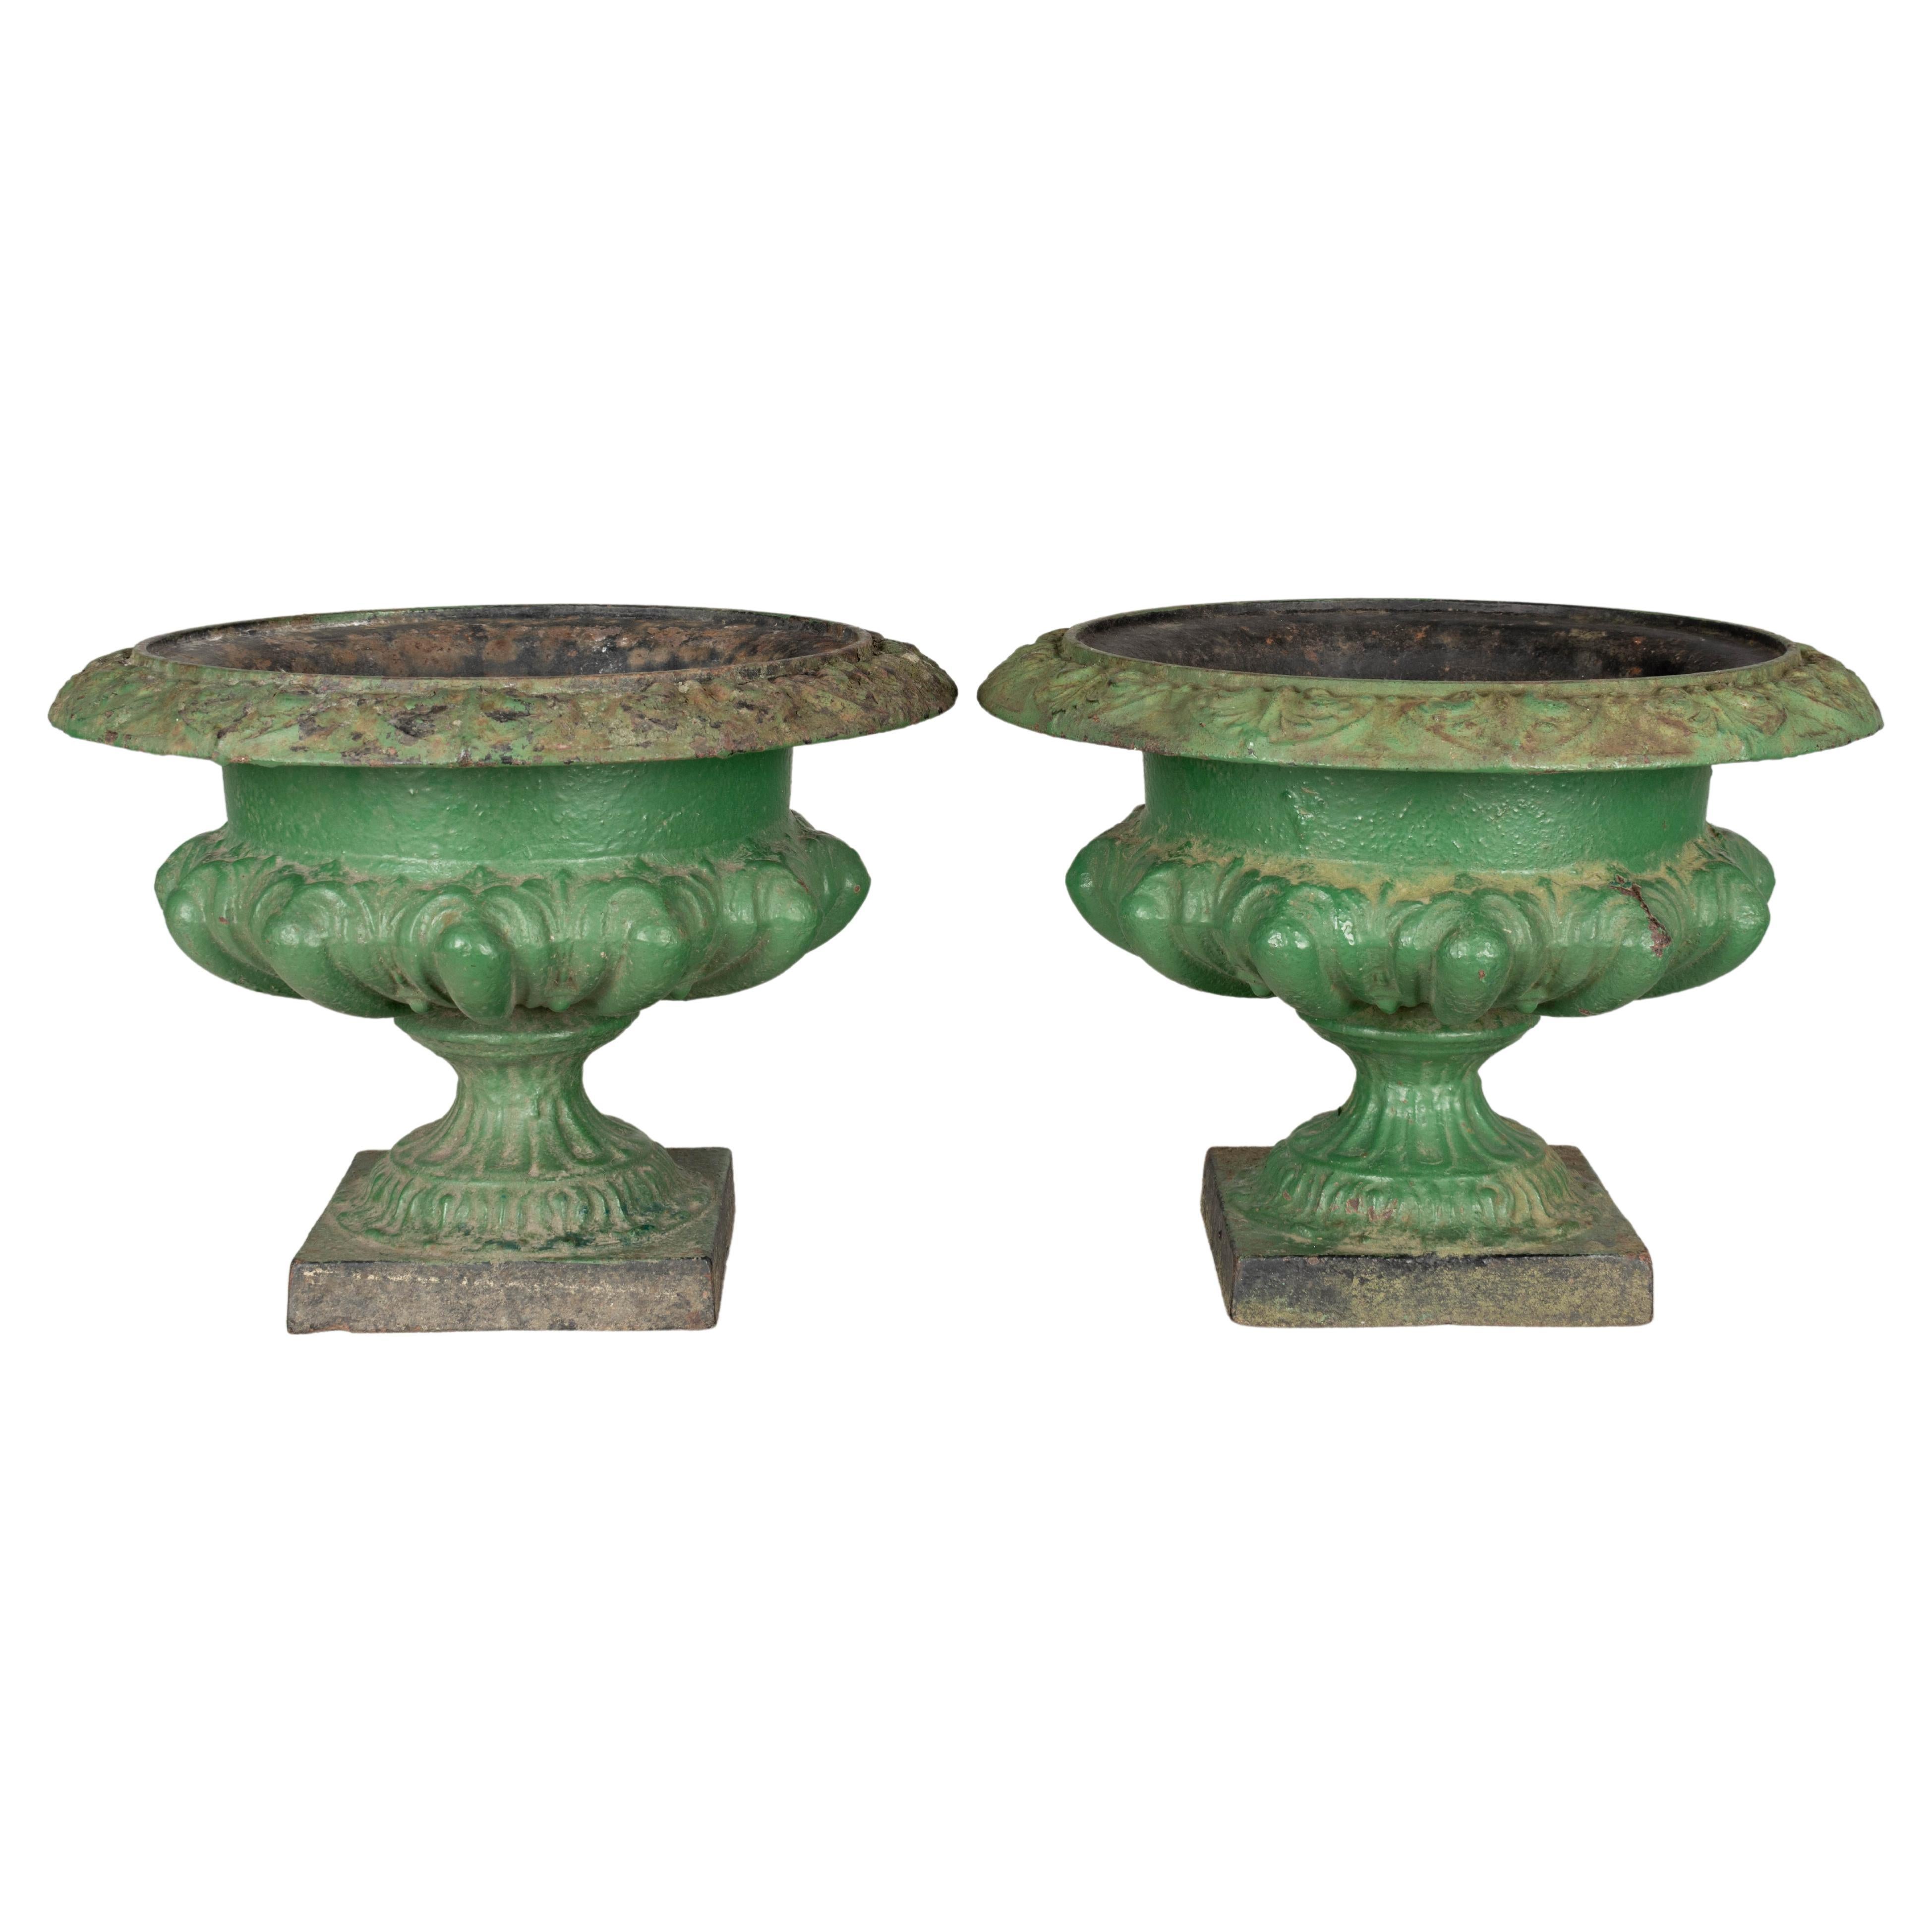 Pair of 19th Century French Cast Iron Garden Urns